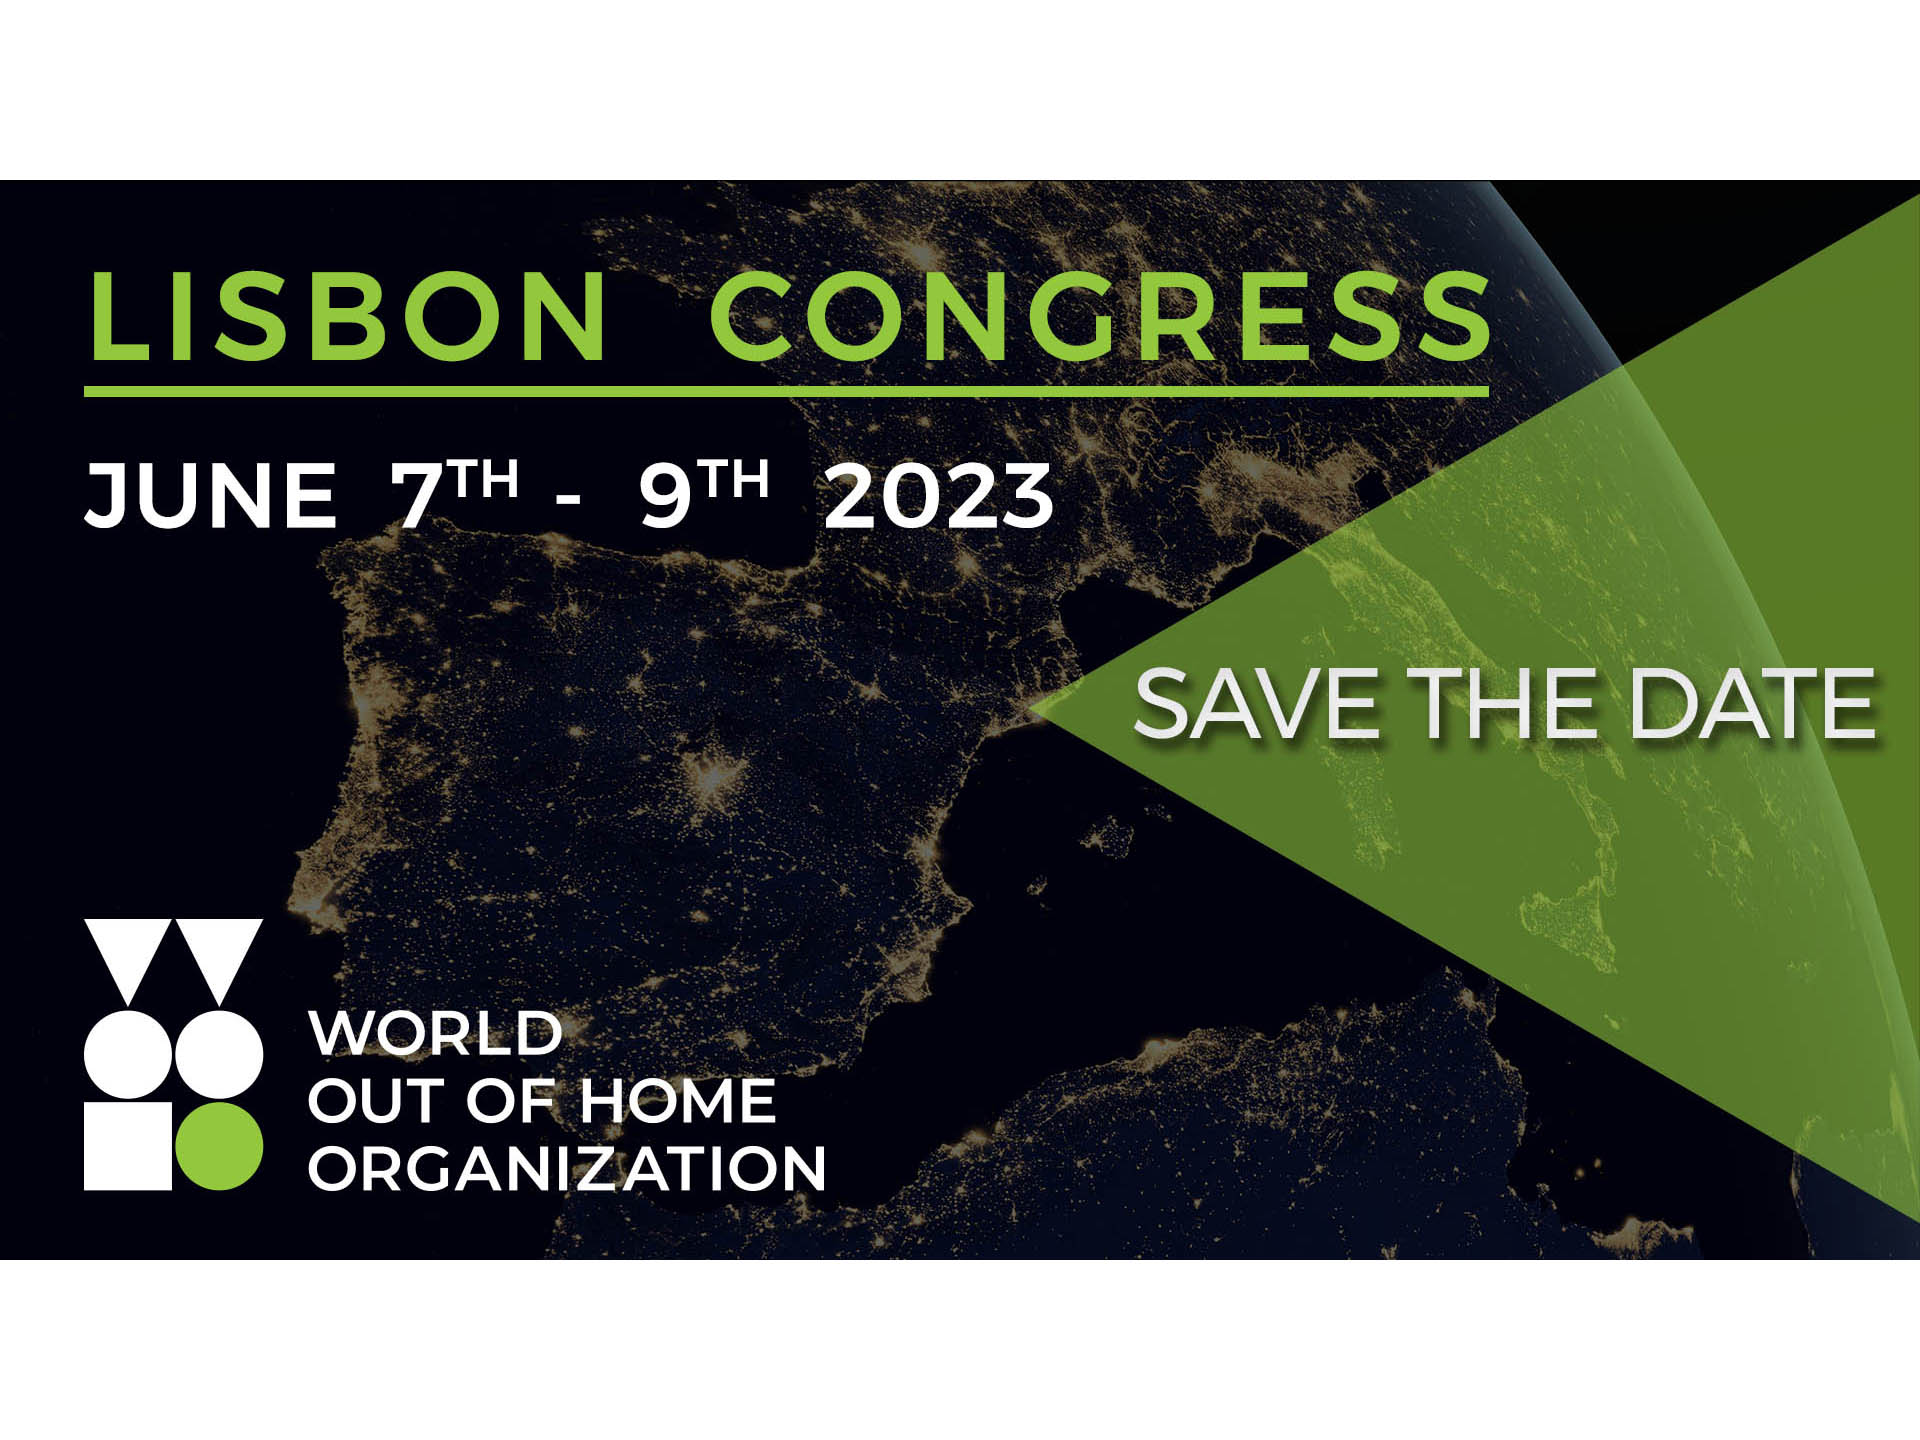 2023 World Out of Home Organization Global Congress  set for Lisbon June 7-9